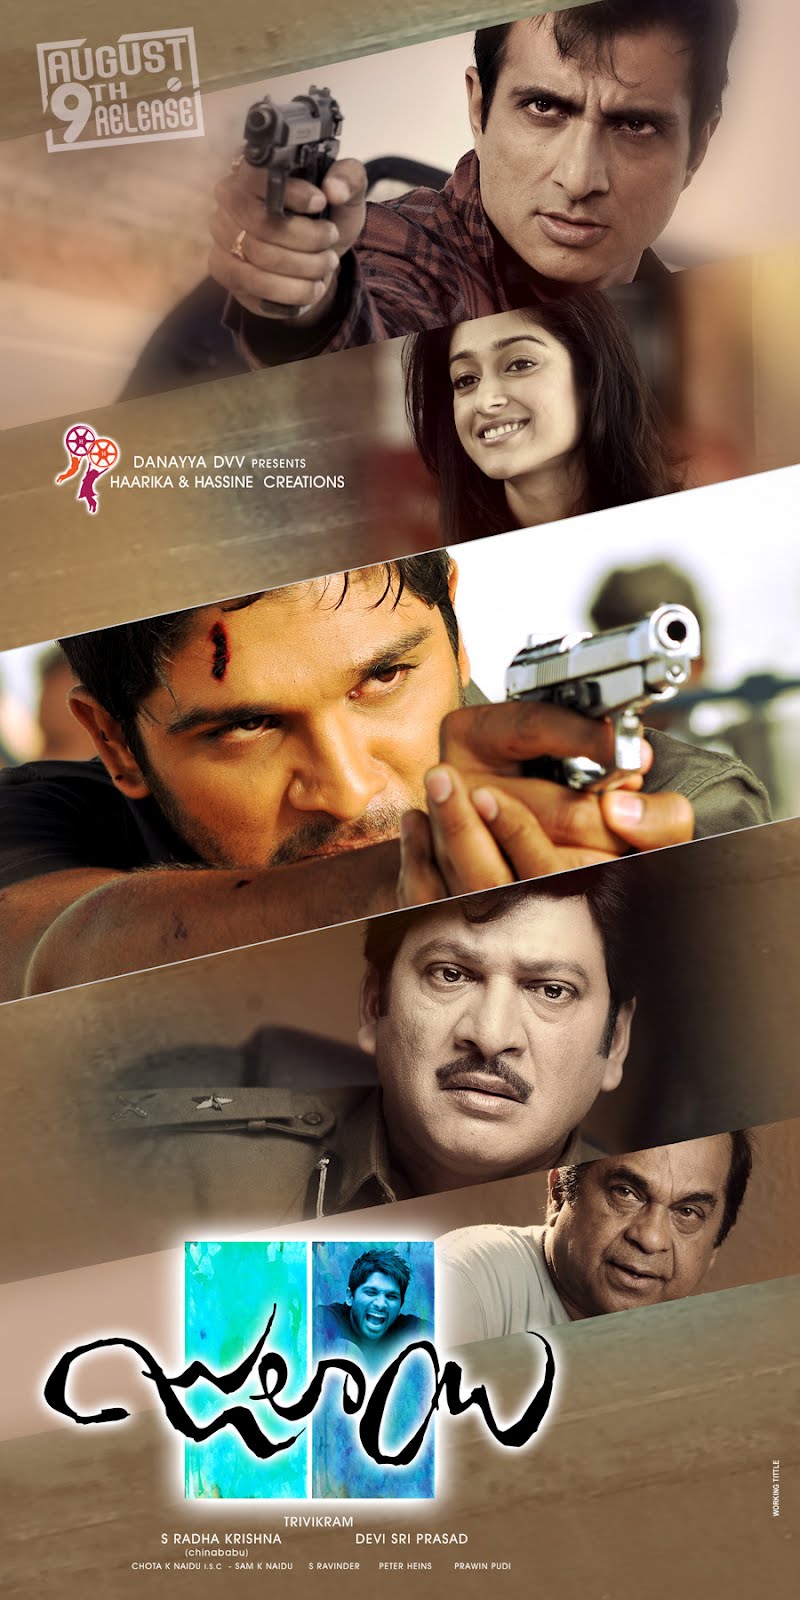 Julayi Telugu Film 3gp Video Songs Call Of Duty Ghost Map Pack 2